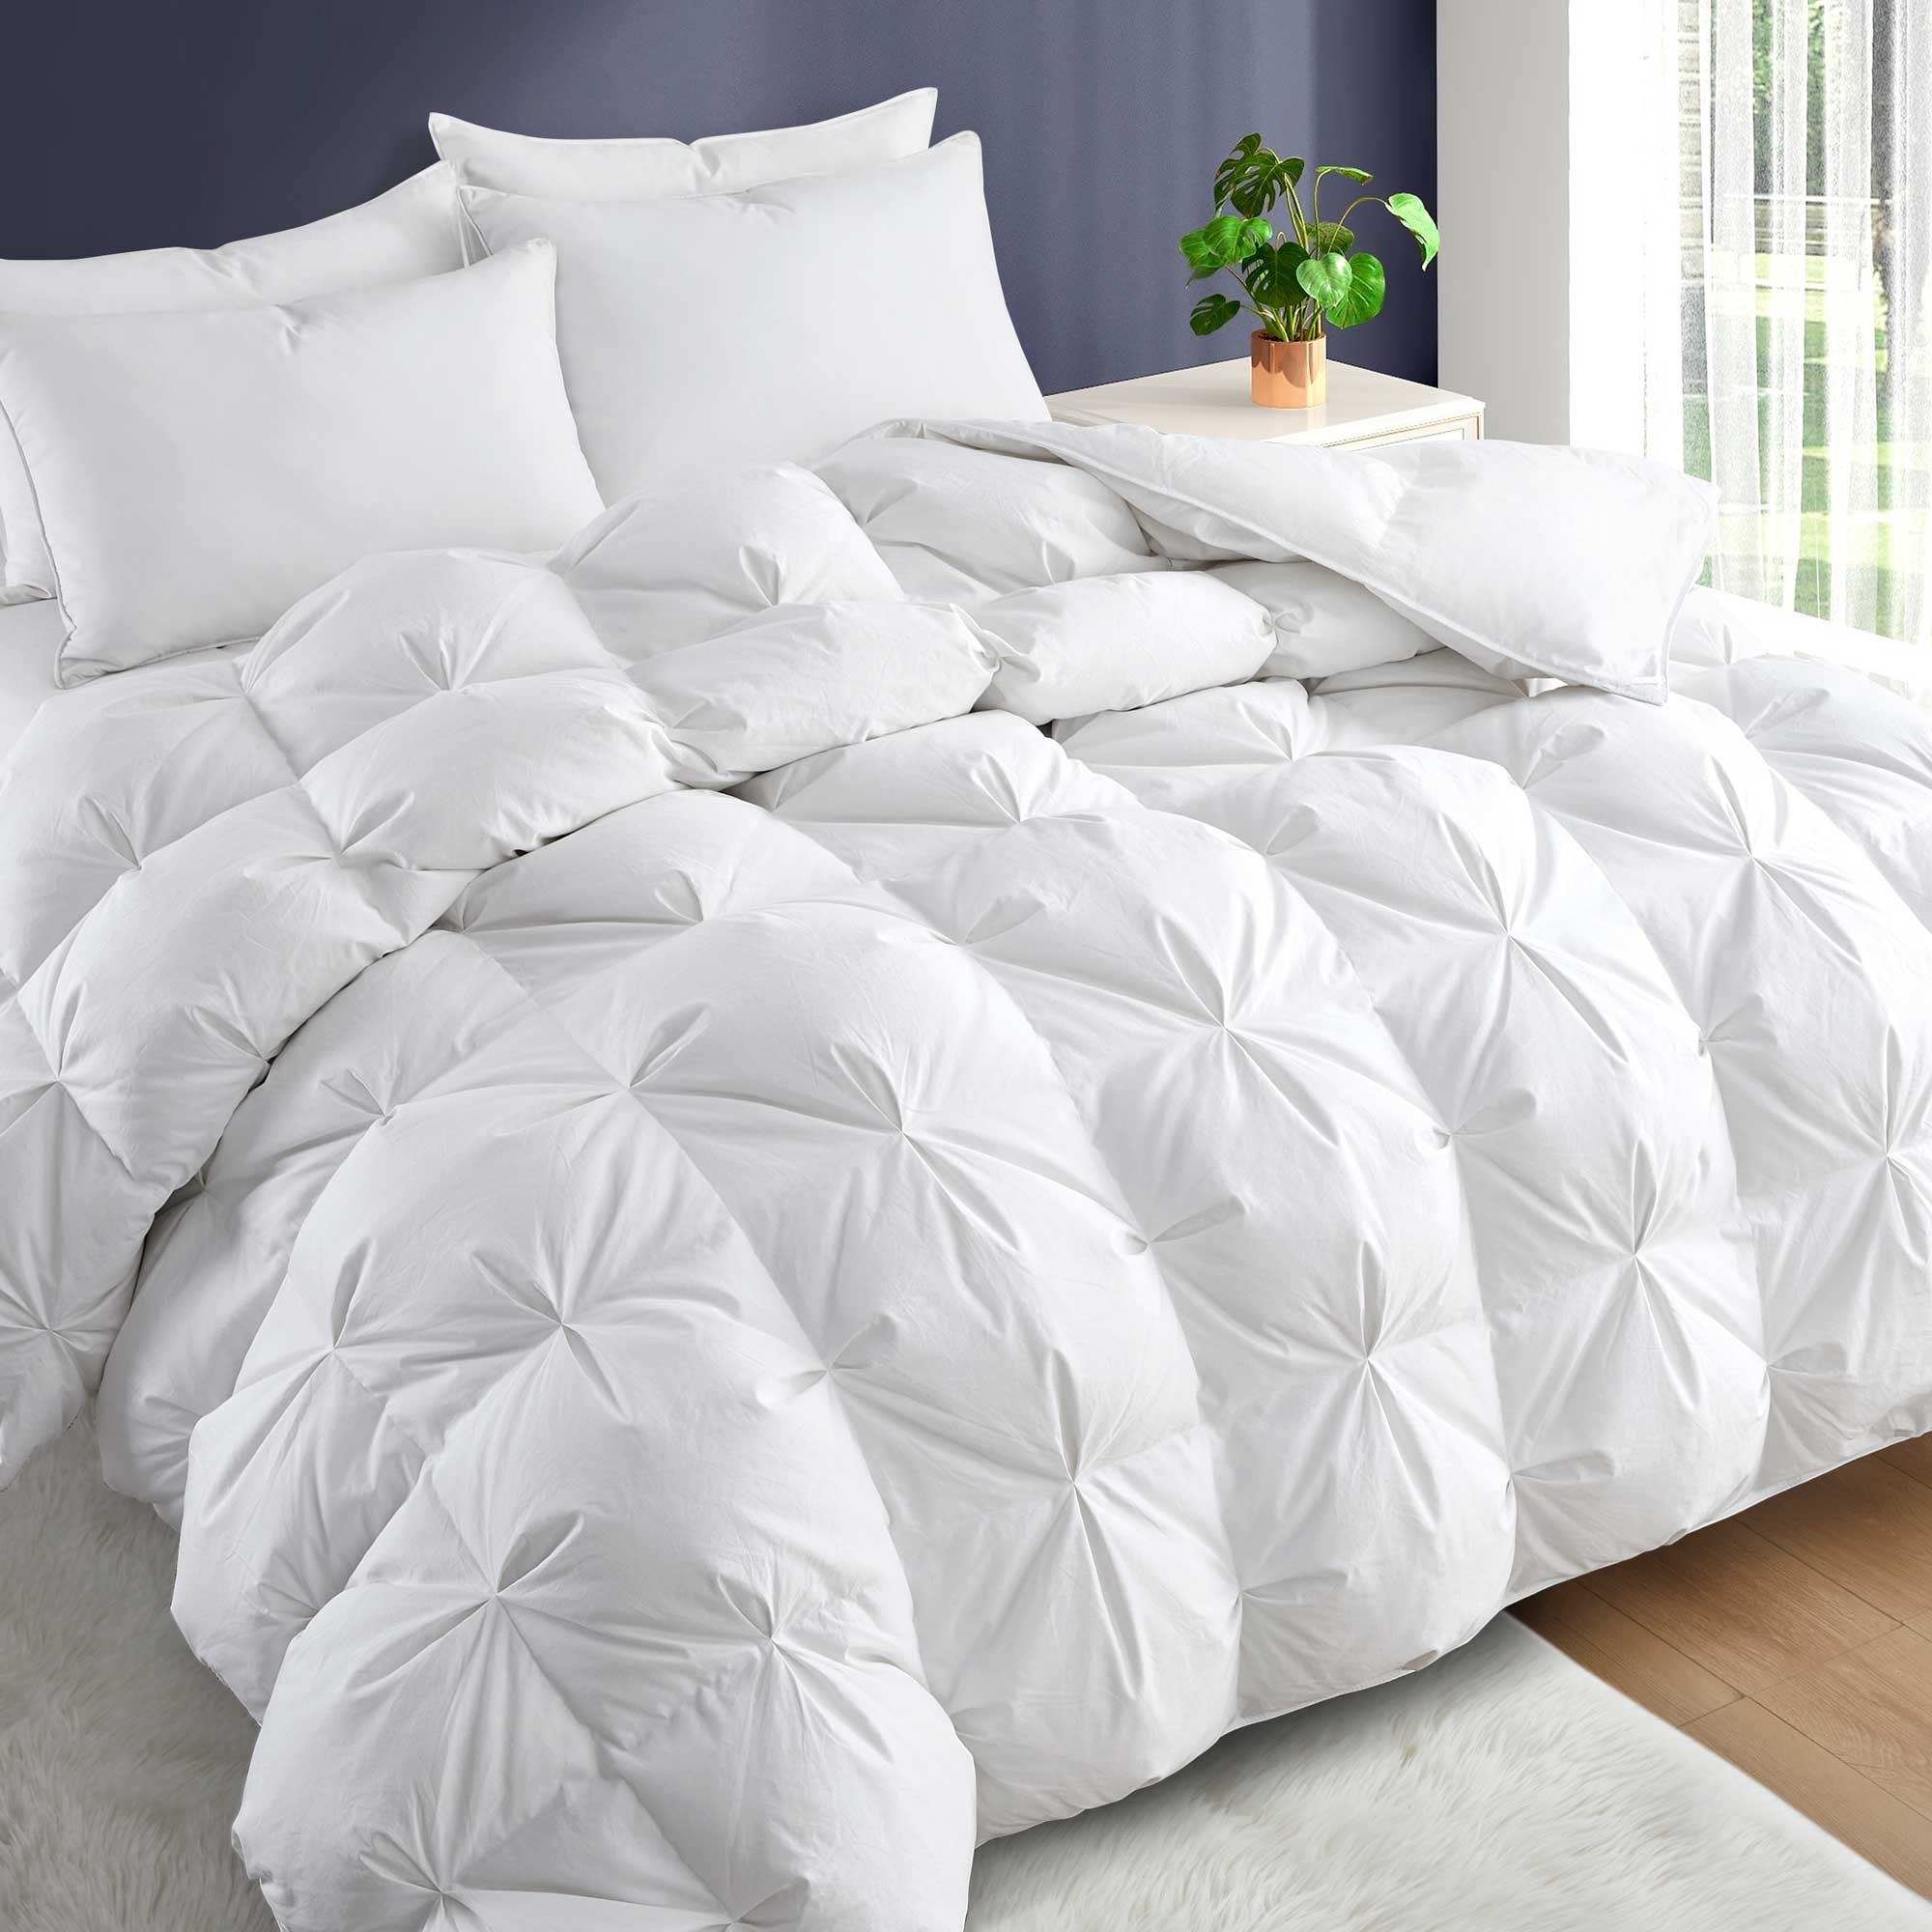 puredown Luxury 800 Fill Power White Goose Down Winter Comforter-Extra Warm Super Soft Heavy Weight Comforter